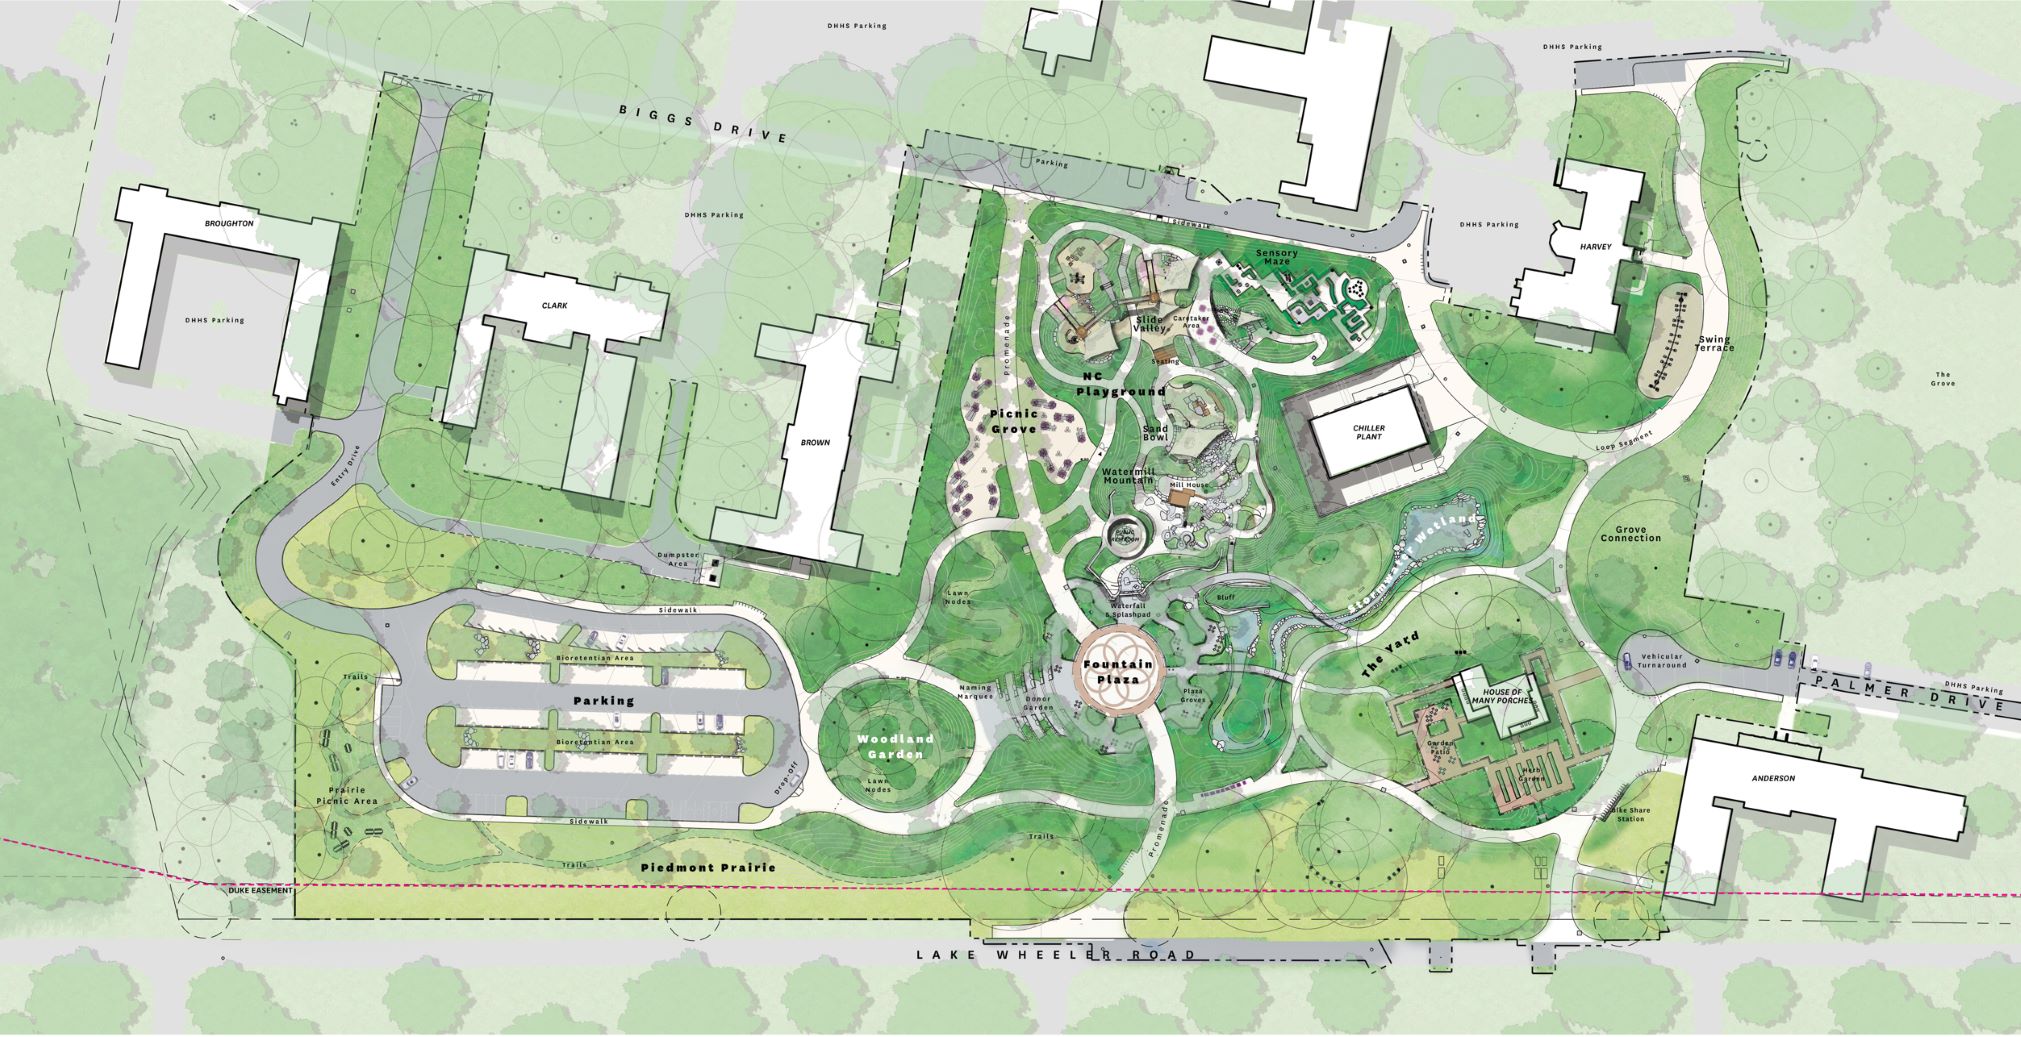 Gipson Play Plaza site plan - February 2022